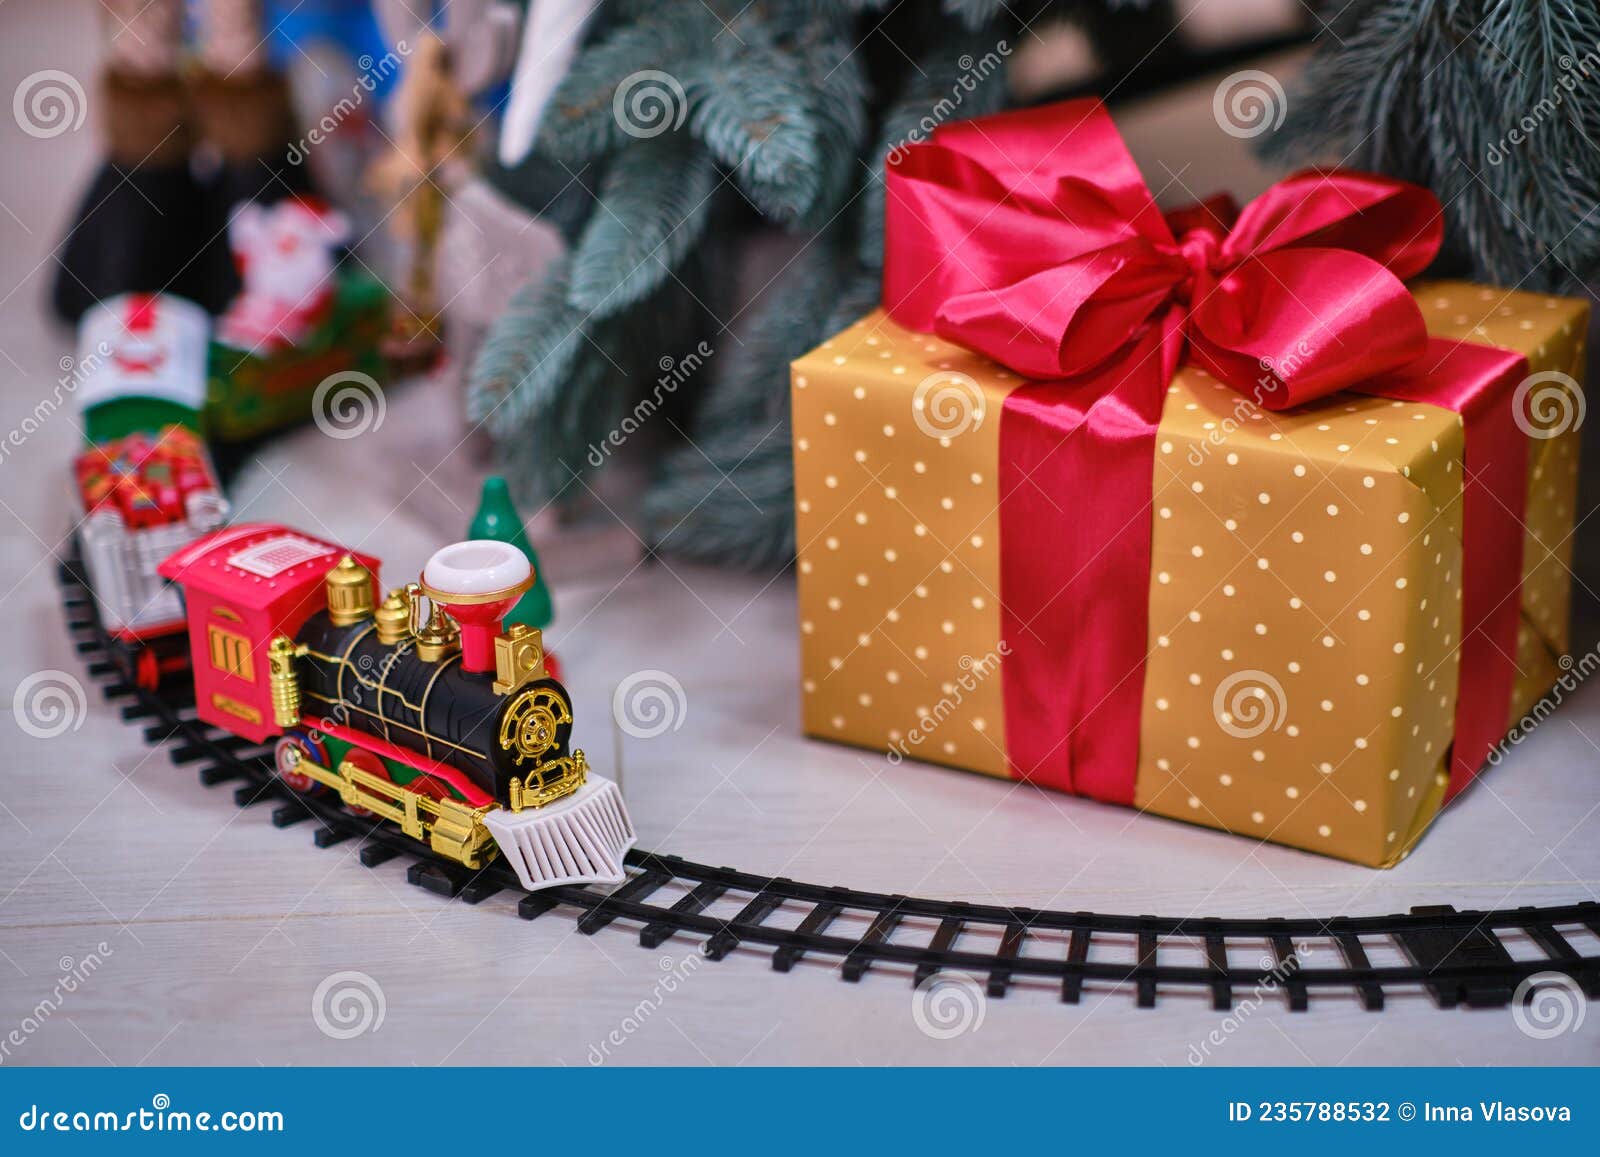 Blue Mini Locomotive Embellishments for Festival Present Christmas Decoration Kid Gift Toys Christmas Wooden Train Set Xmas Table Top Ornament